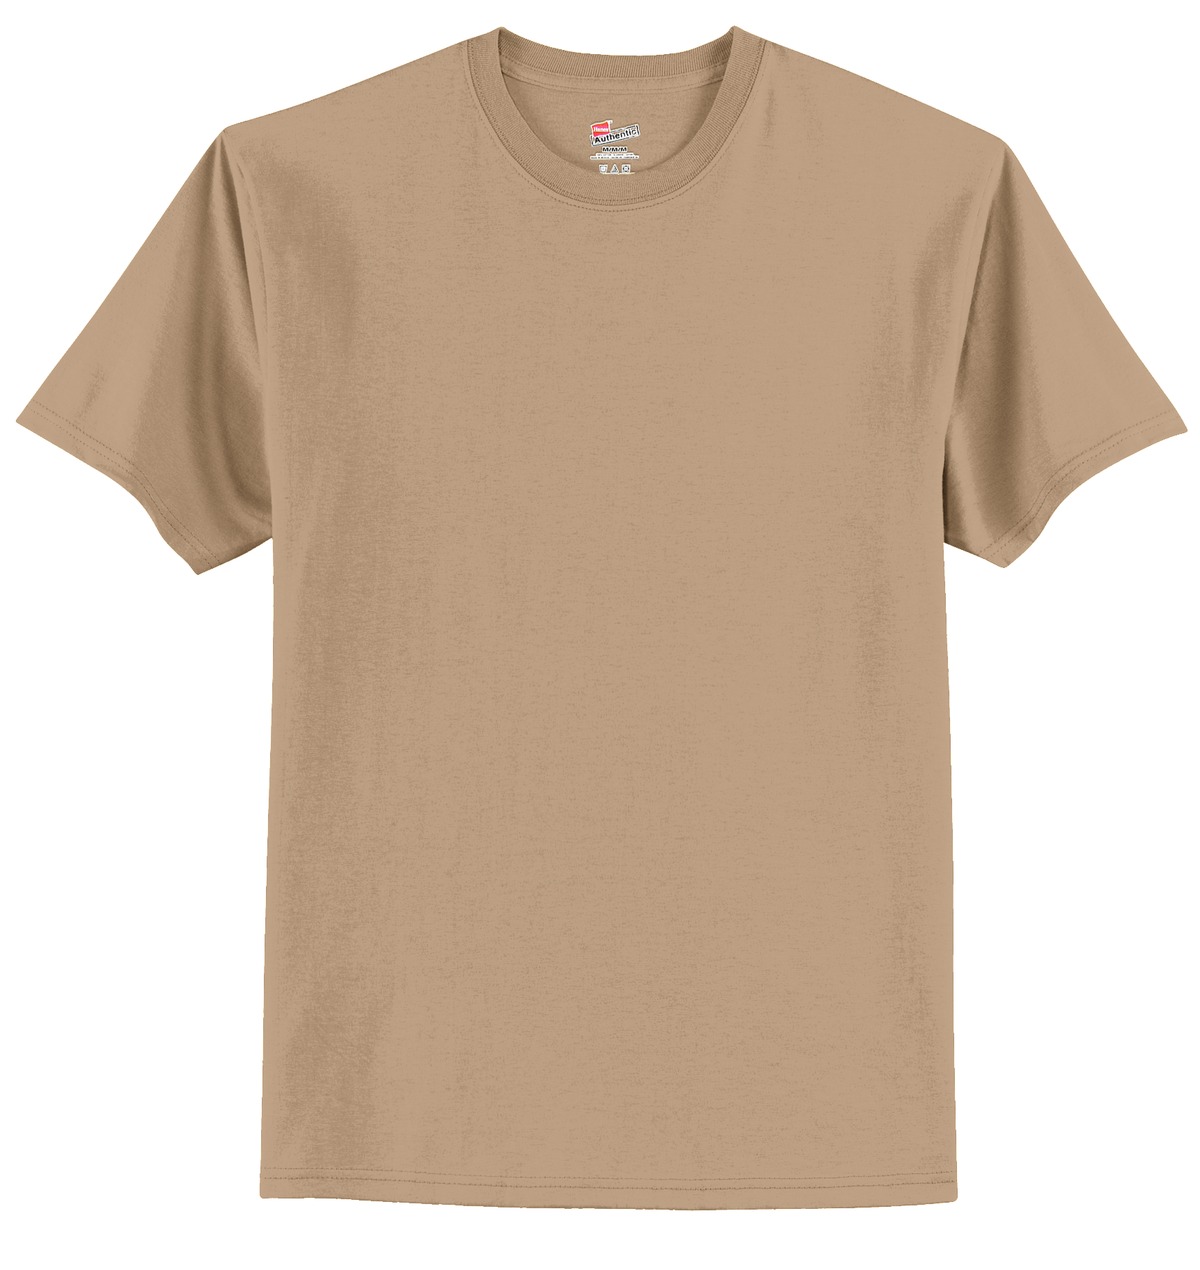 Hanes ComfortSoft® Cotton T-Shirt